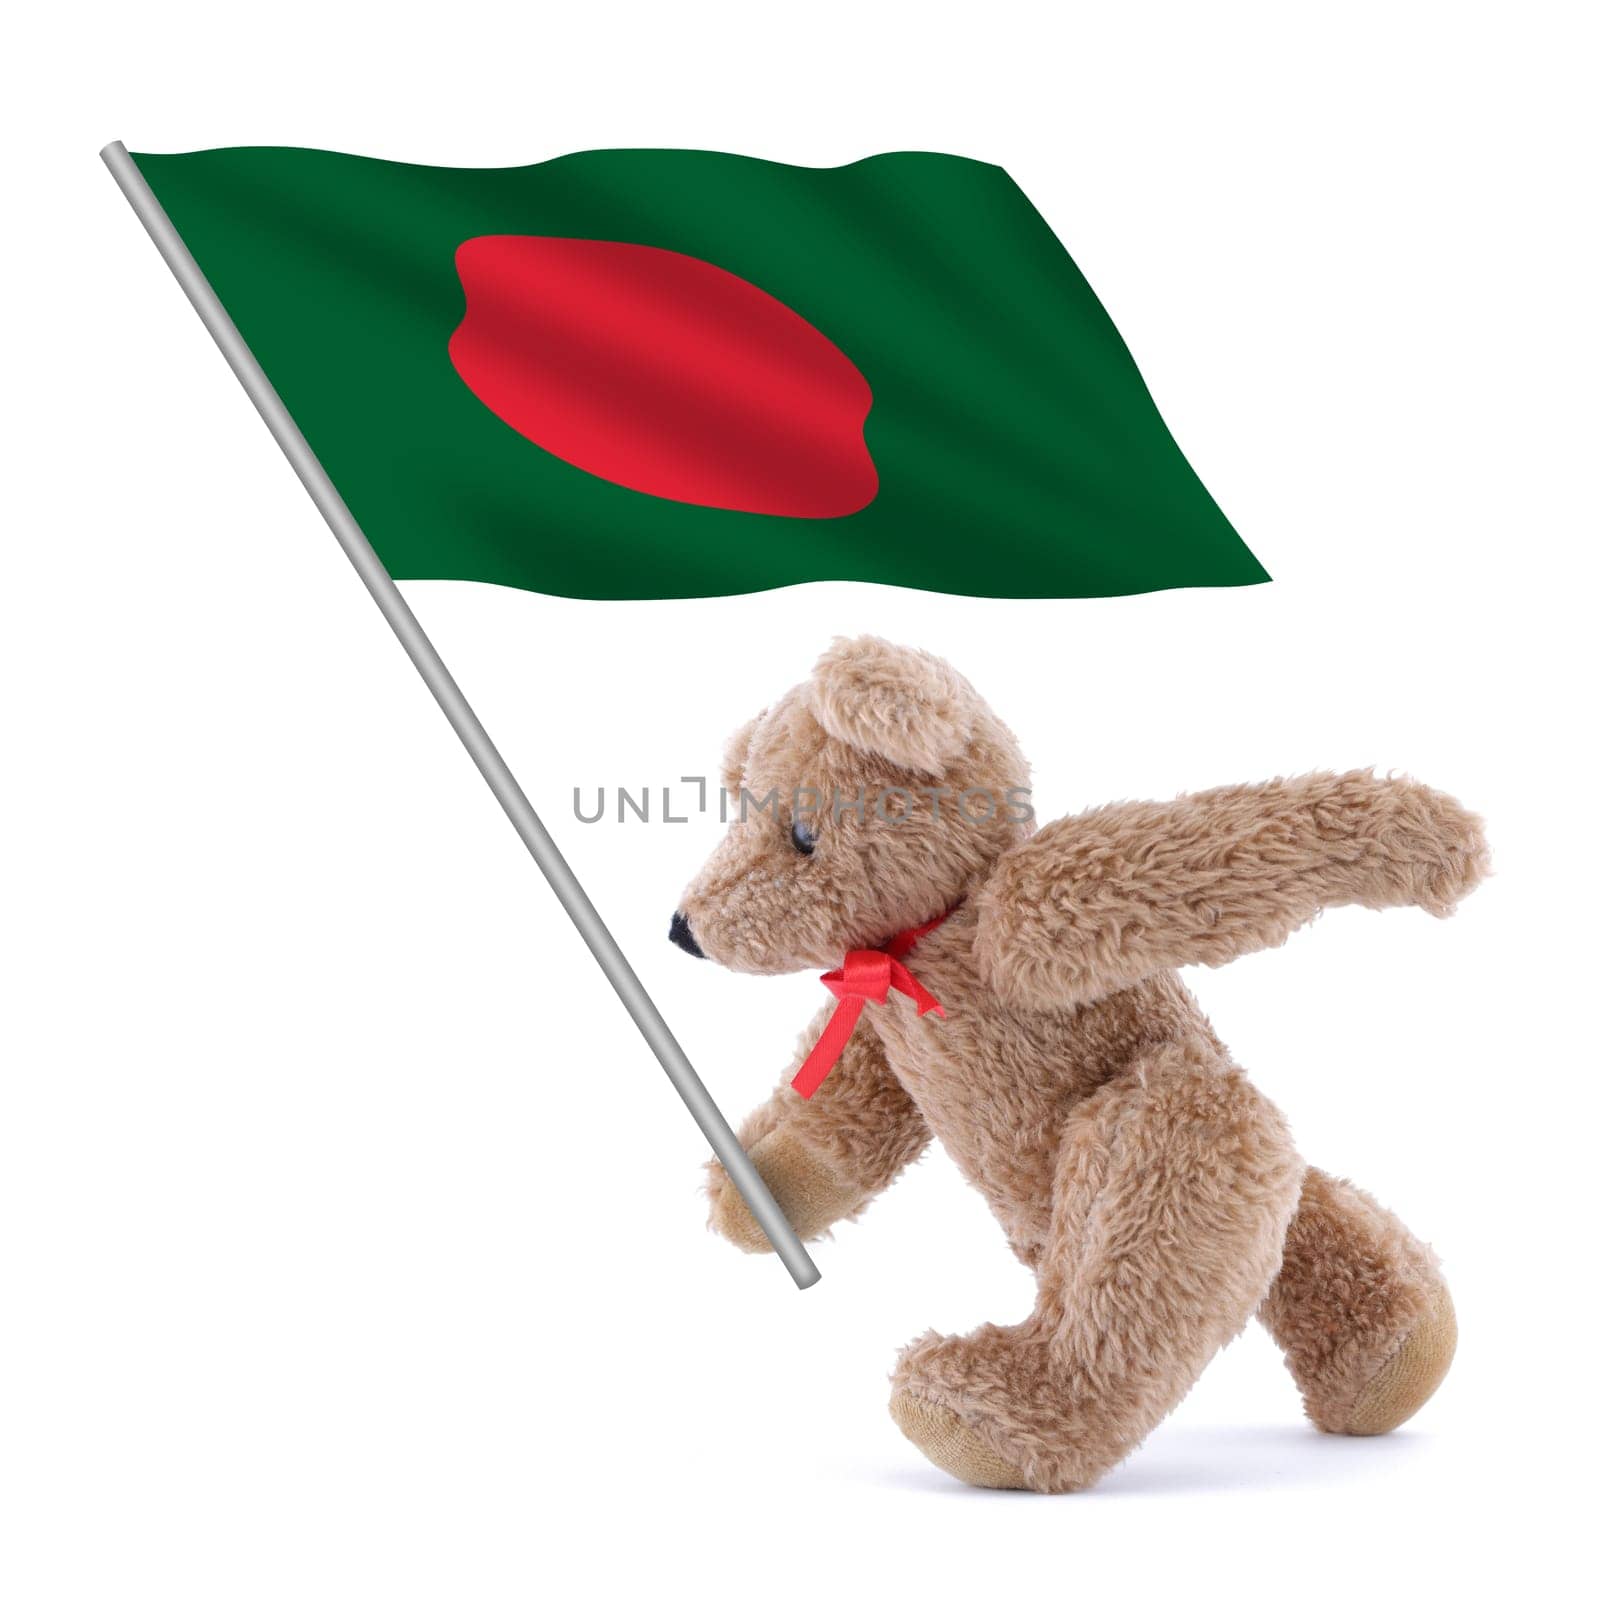 A Bangladesh flag being carried by a cute teddy bear